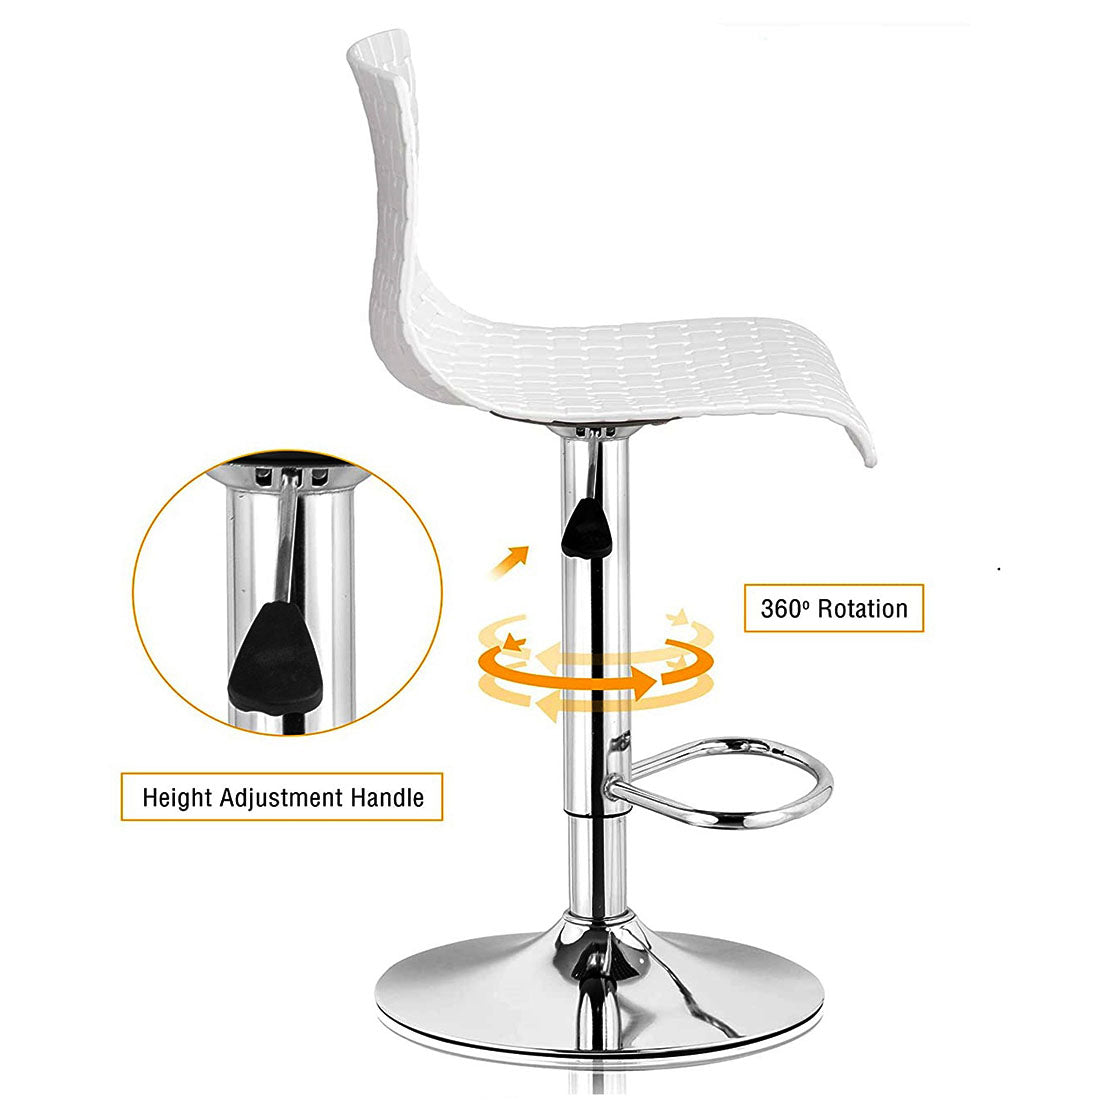 Cafeteria Restaurant Bar Stool Chair (White)